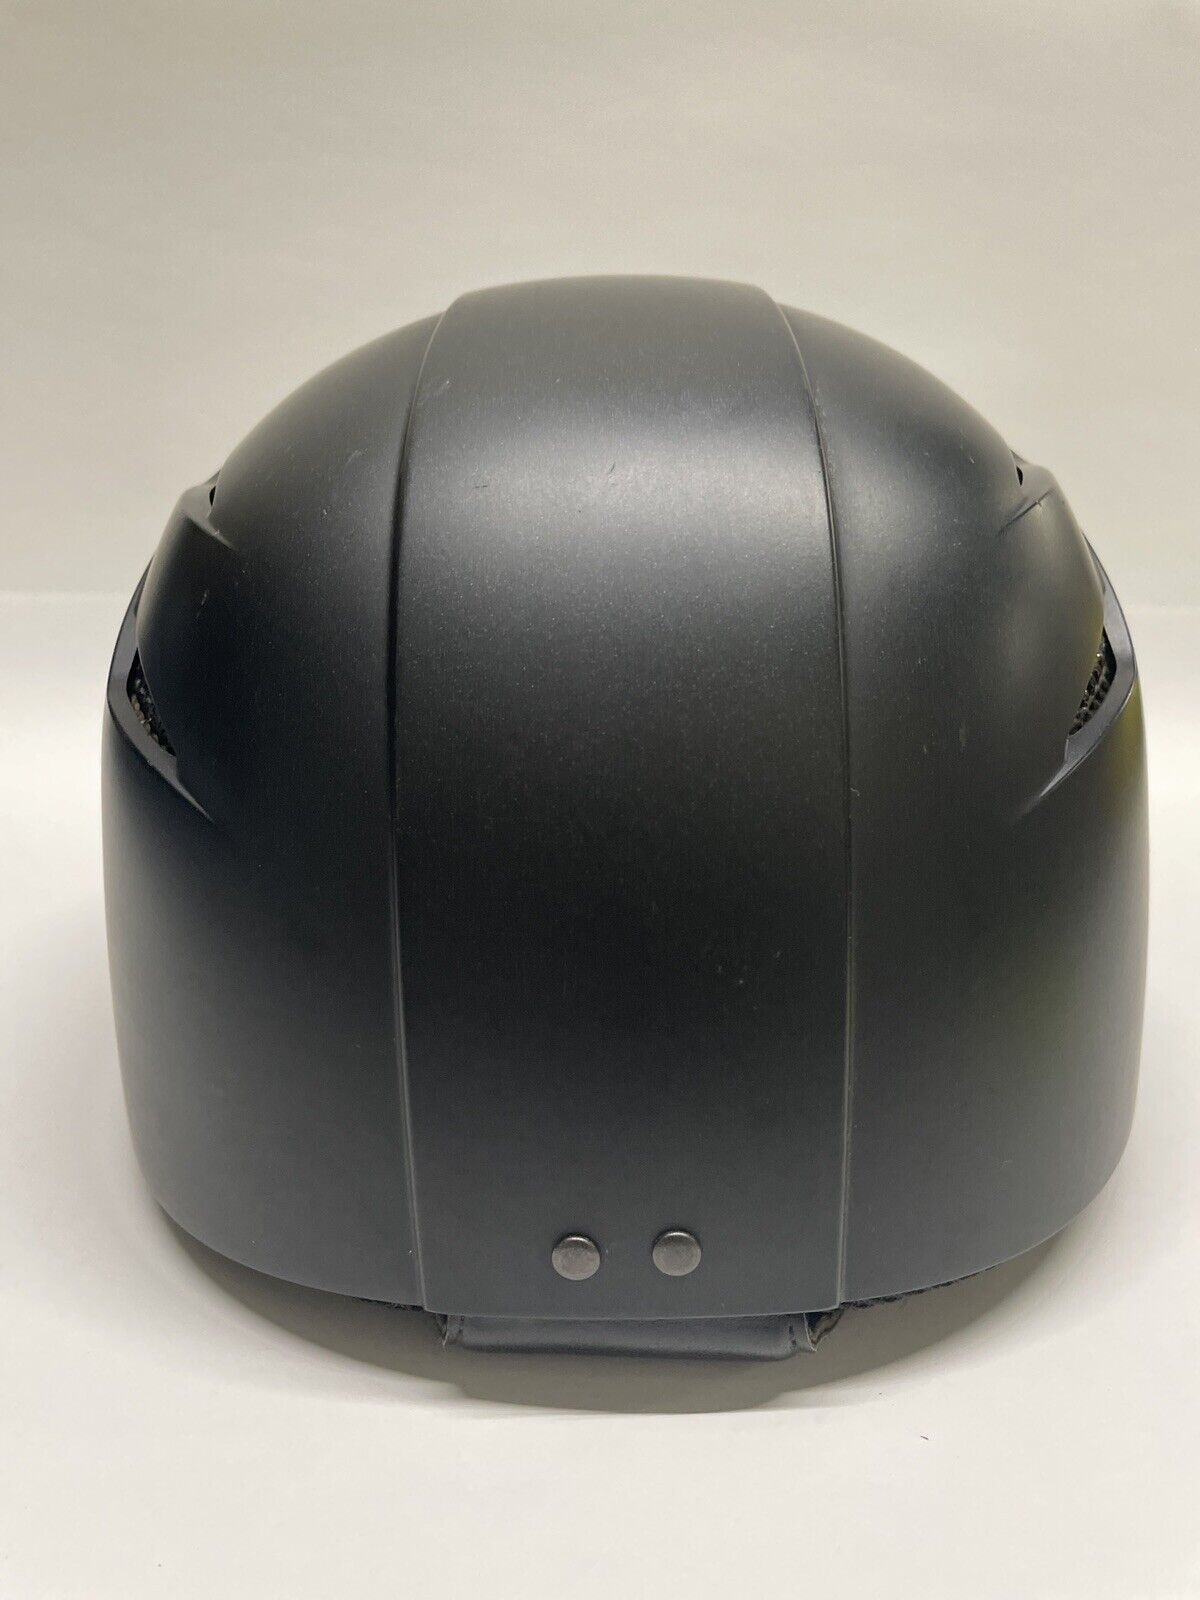 GPA Easy 2X Black Matte Horseback Riding Helmet, Size 7-1/4 or 59, With Bag